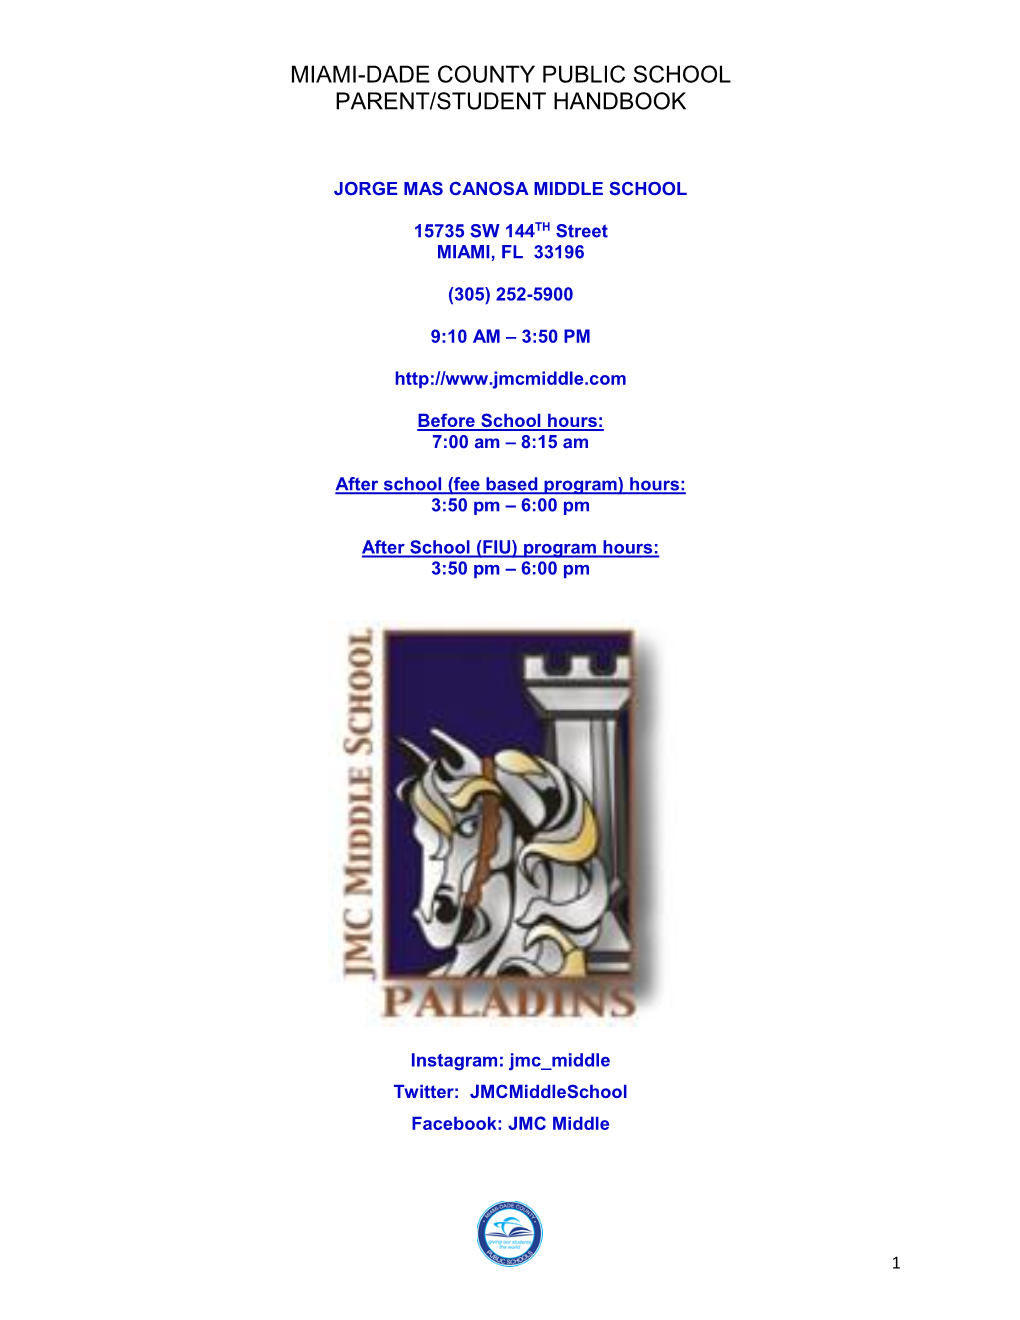 Miami-Dade County Public School Parent/Student Handbook